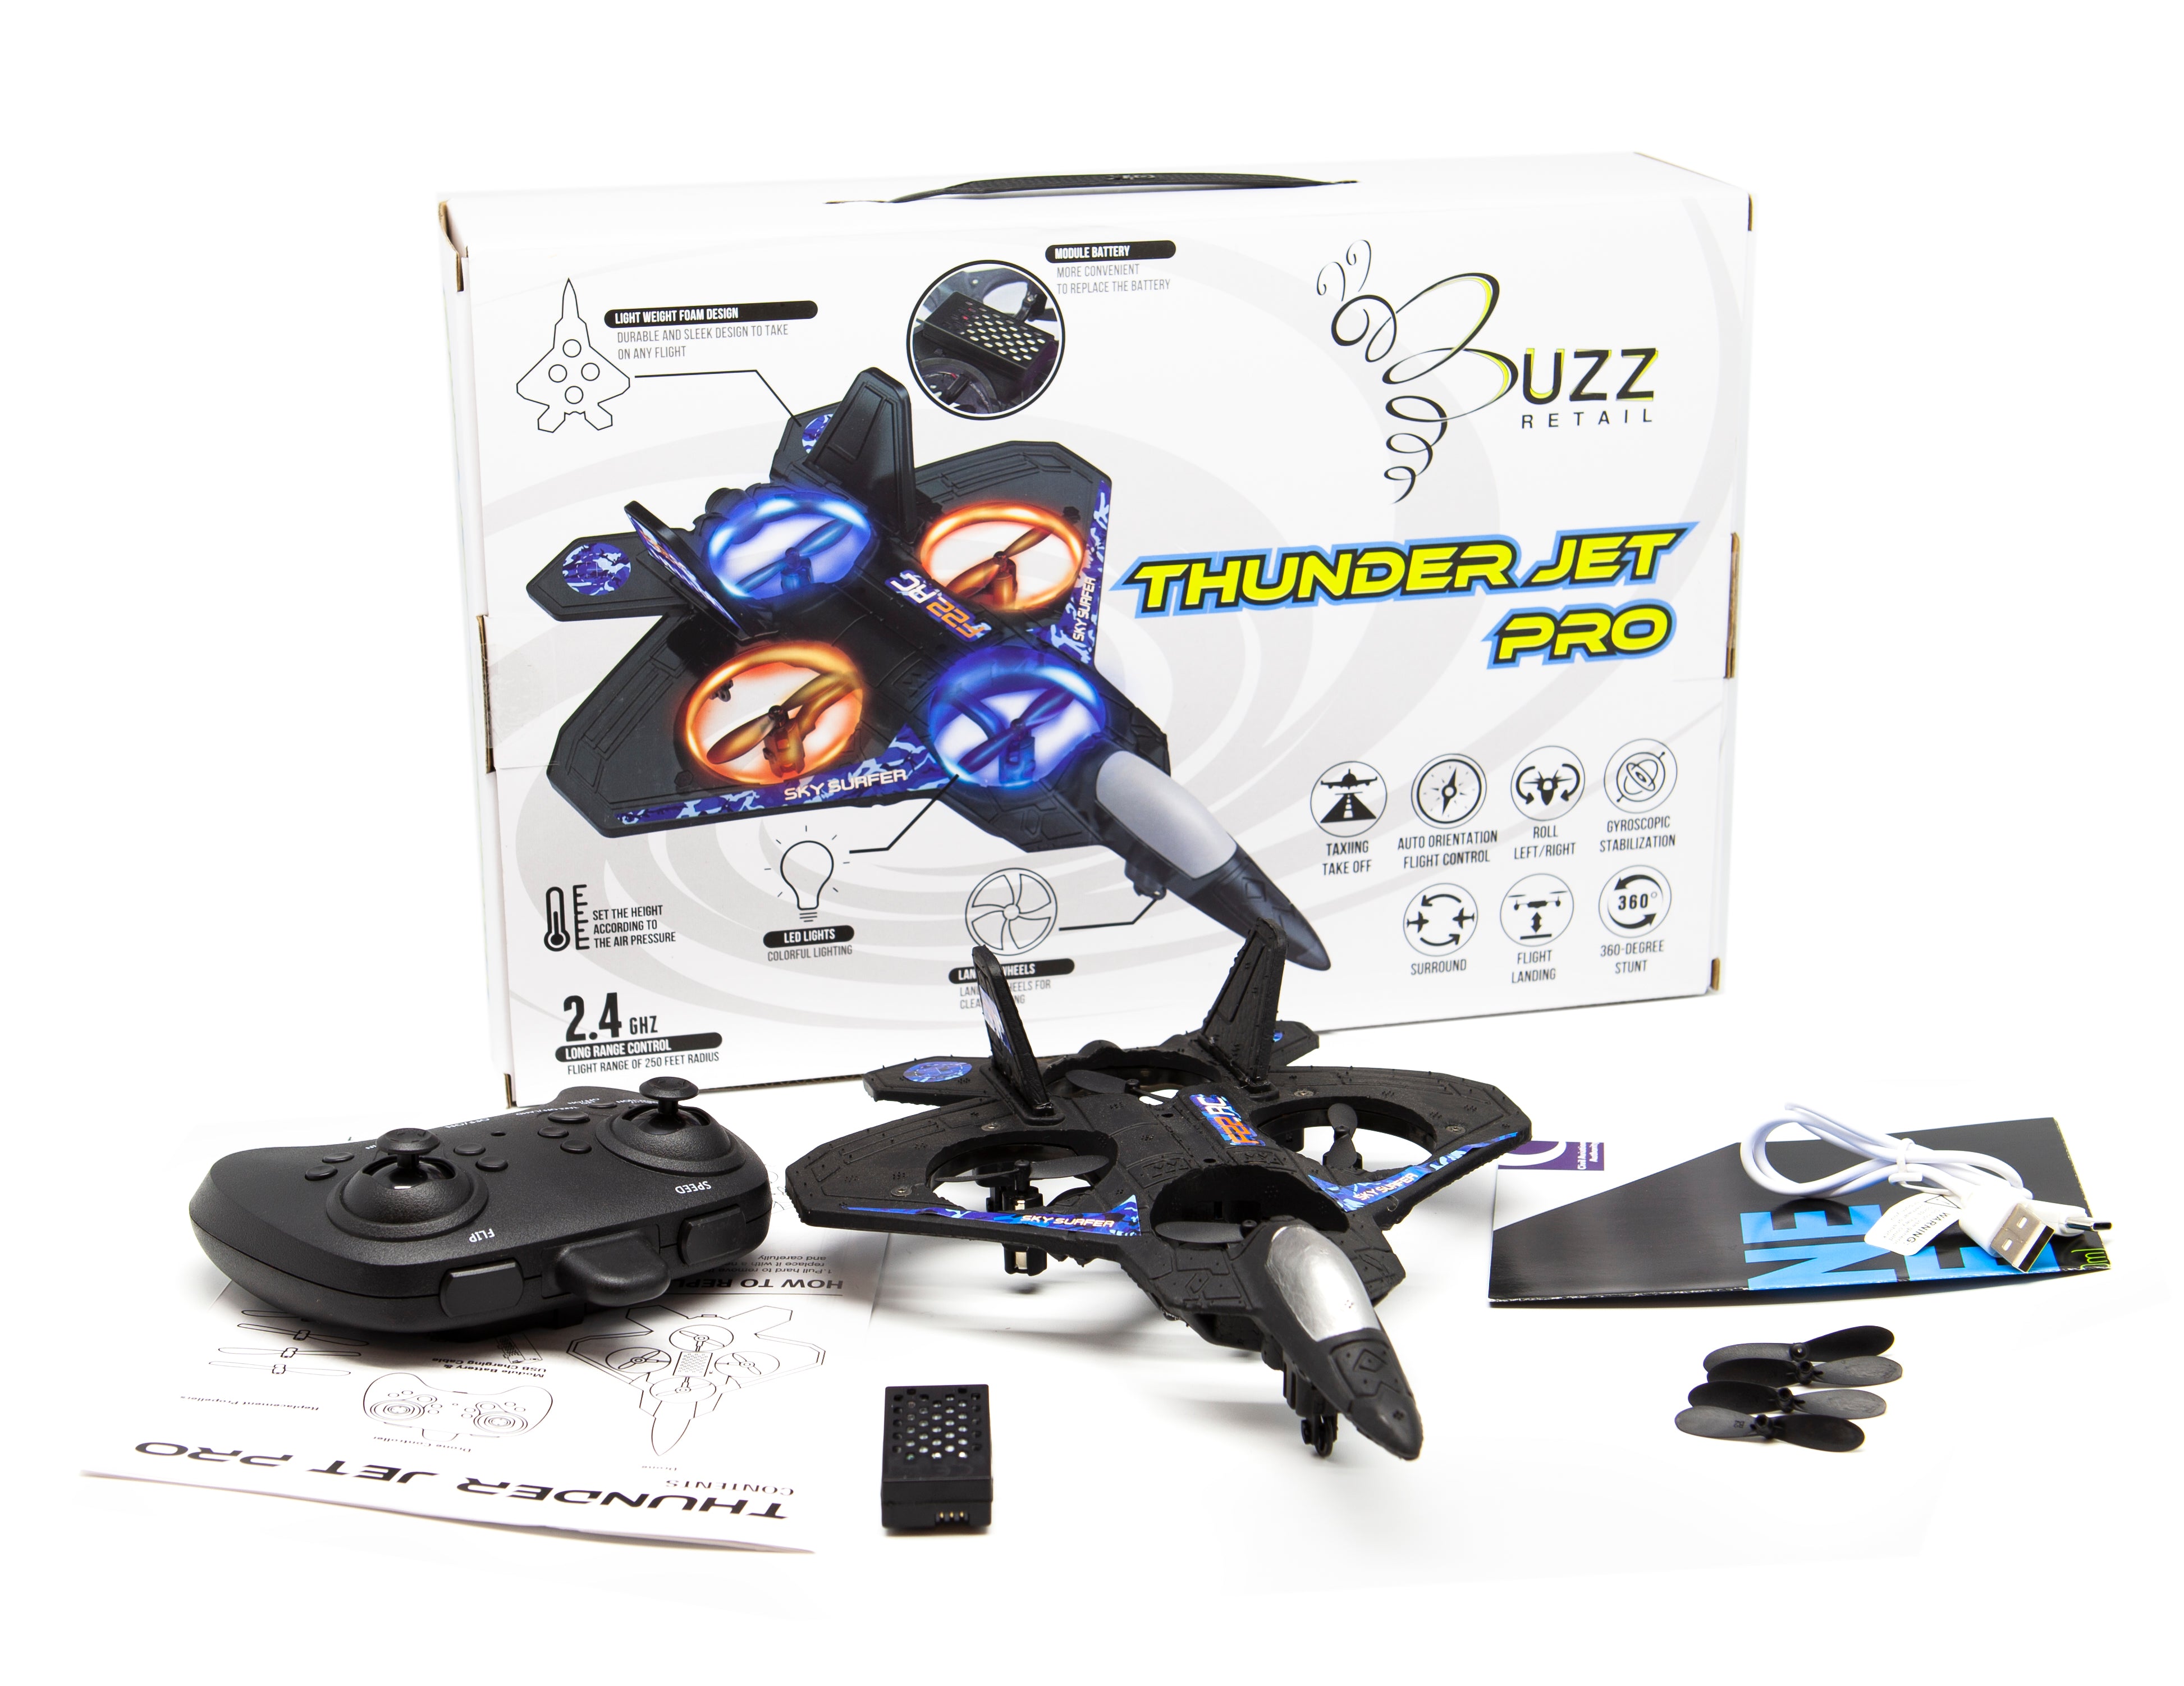 Thunder Camera Drone Pro – Buzz Retail Limited